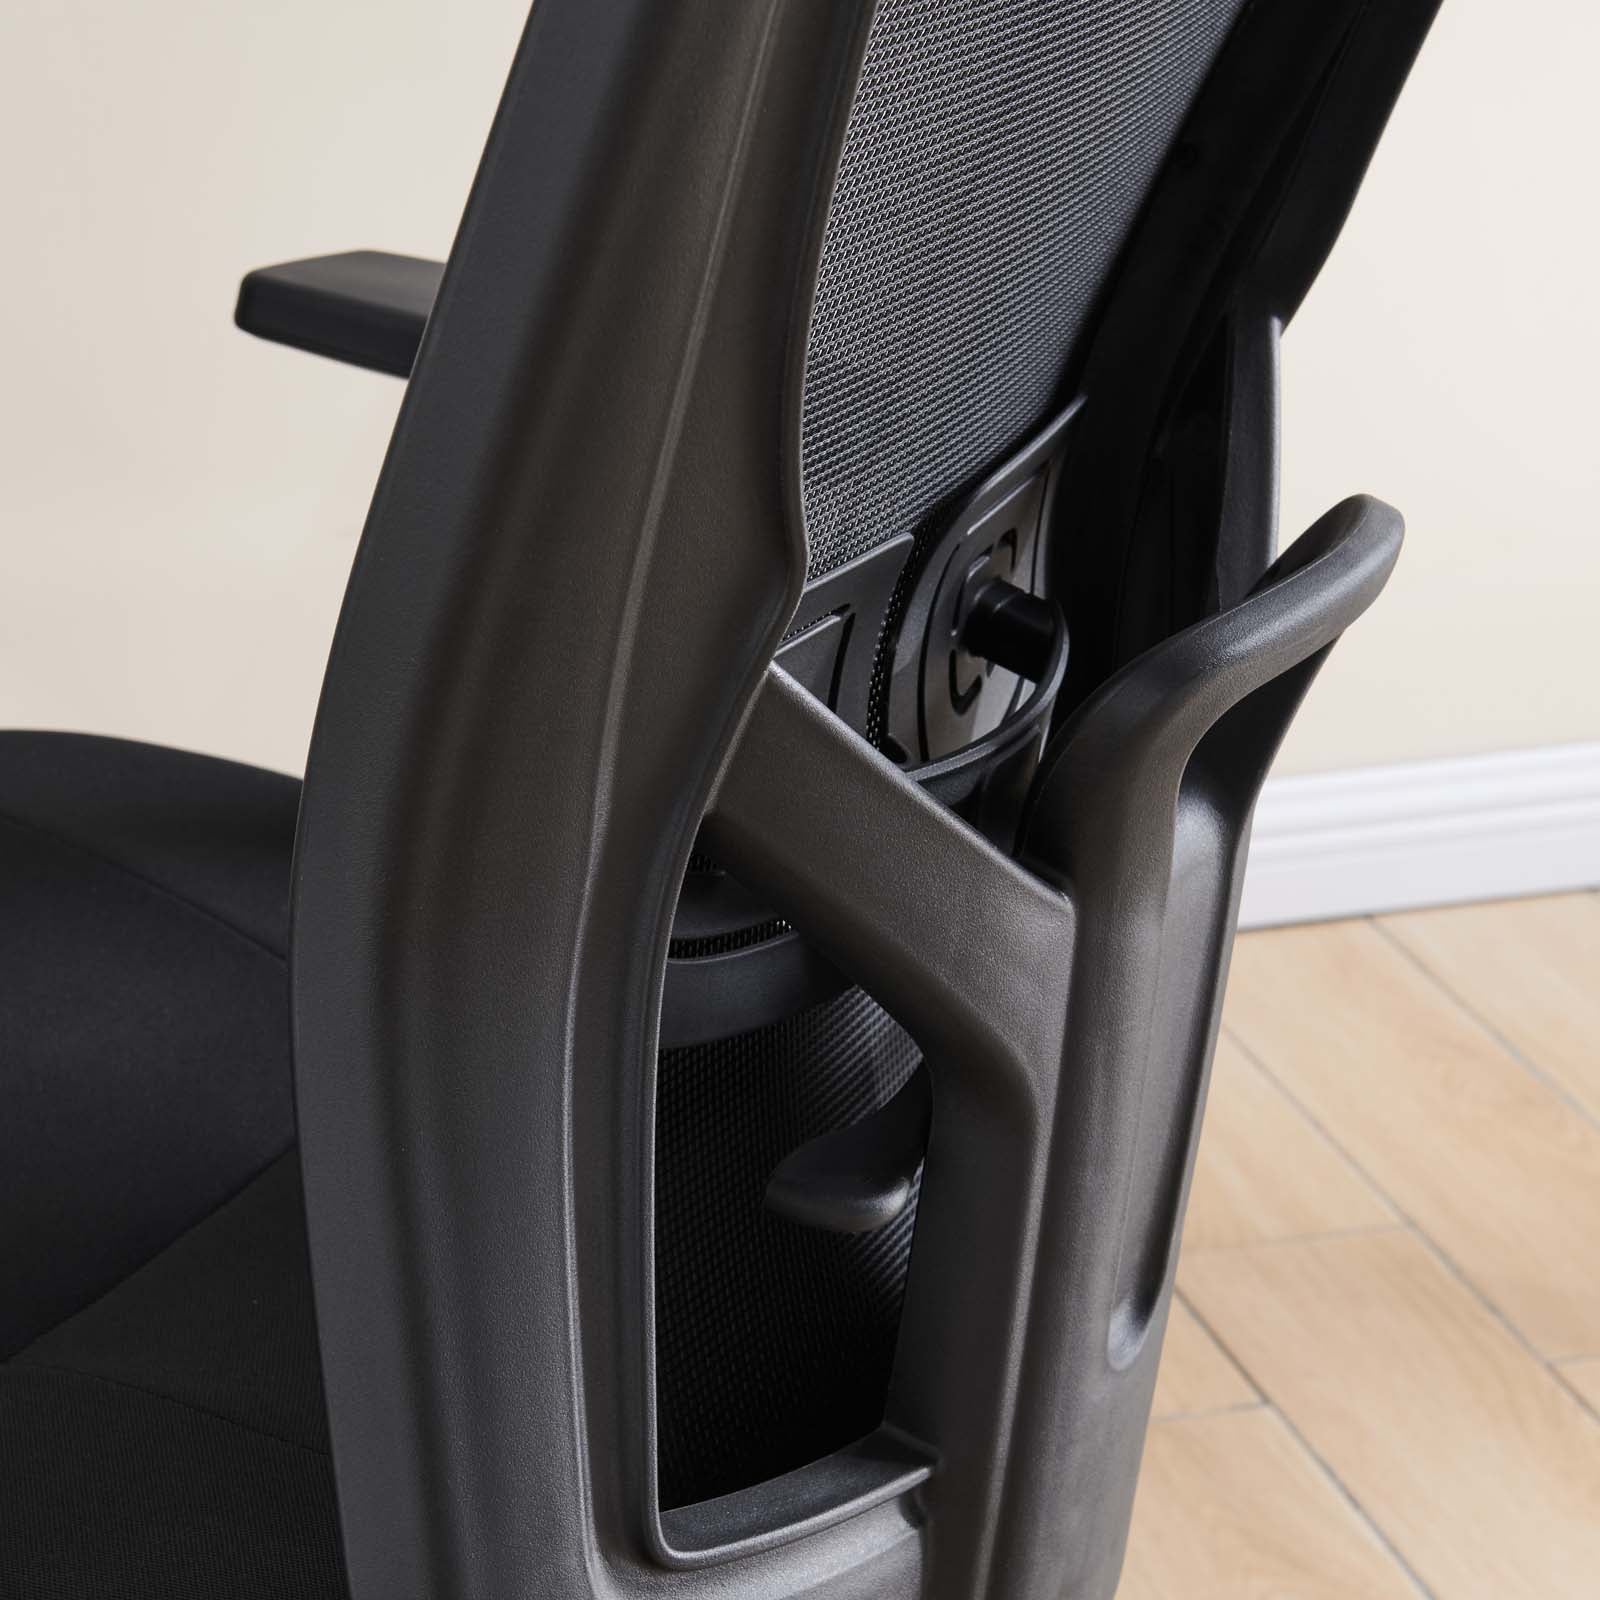 Modway Furniture Modern Define Mesh Office Chair - EEI-3900